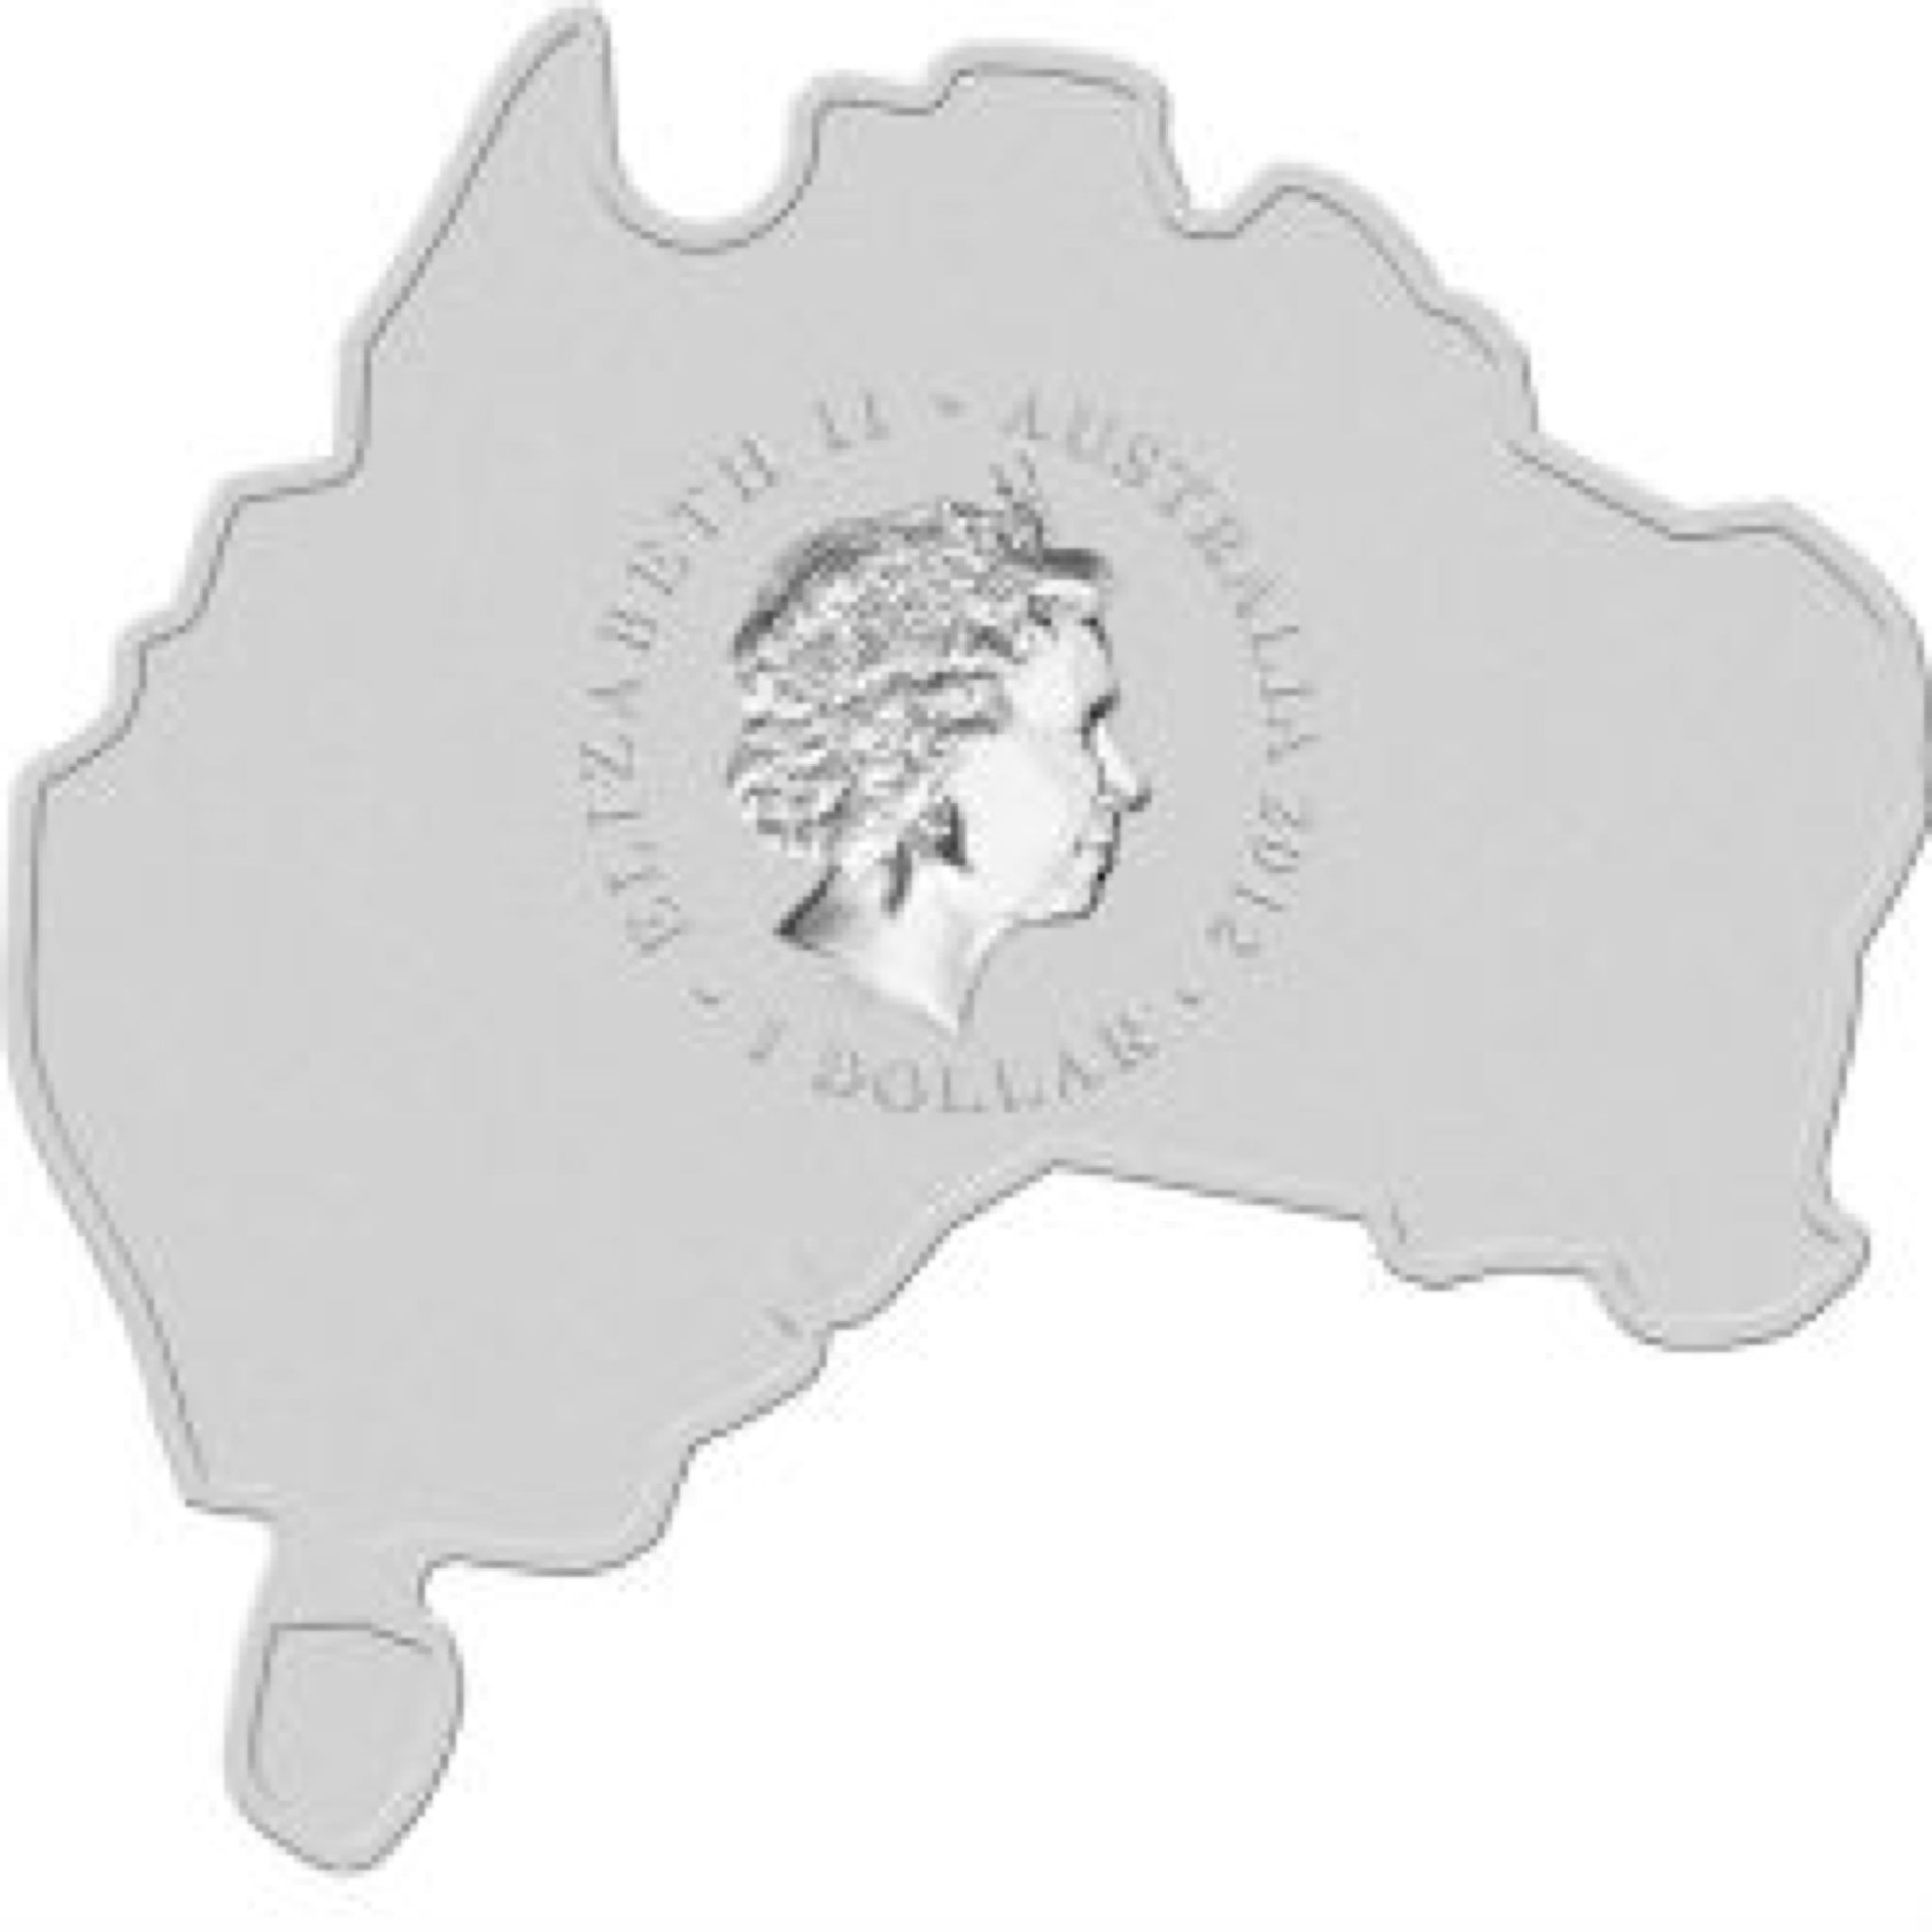 2012 Kookaburra 1oz Map Shape  coin collectible [Barcode 9327025022284] - Main Image 2